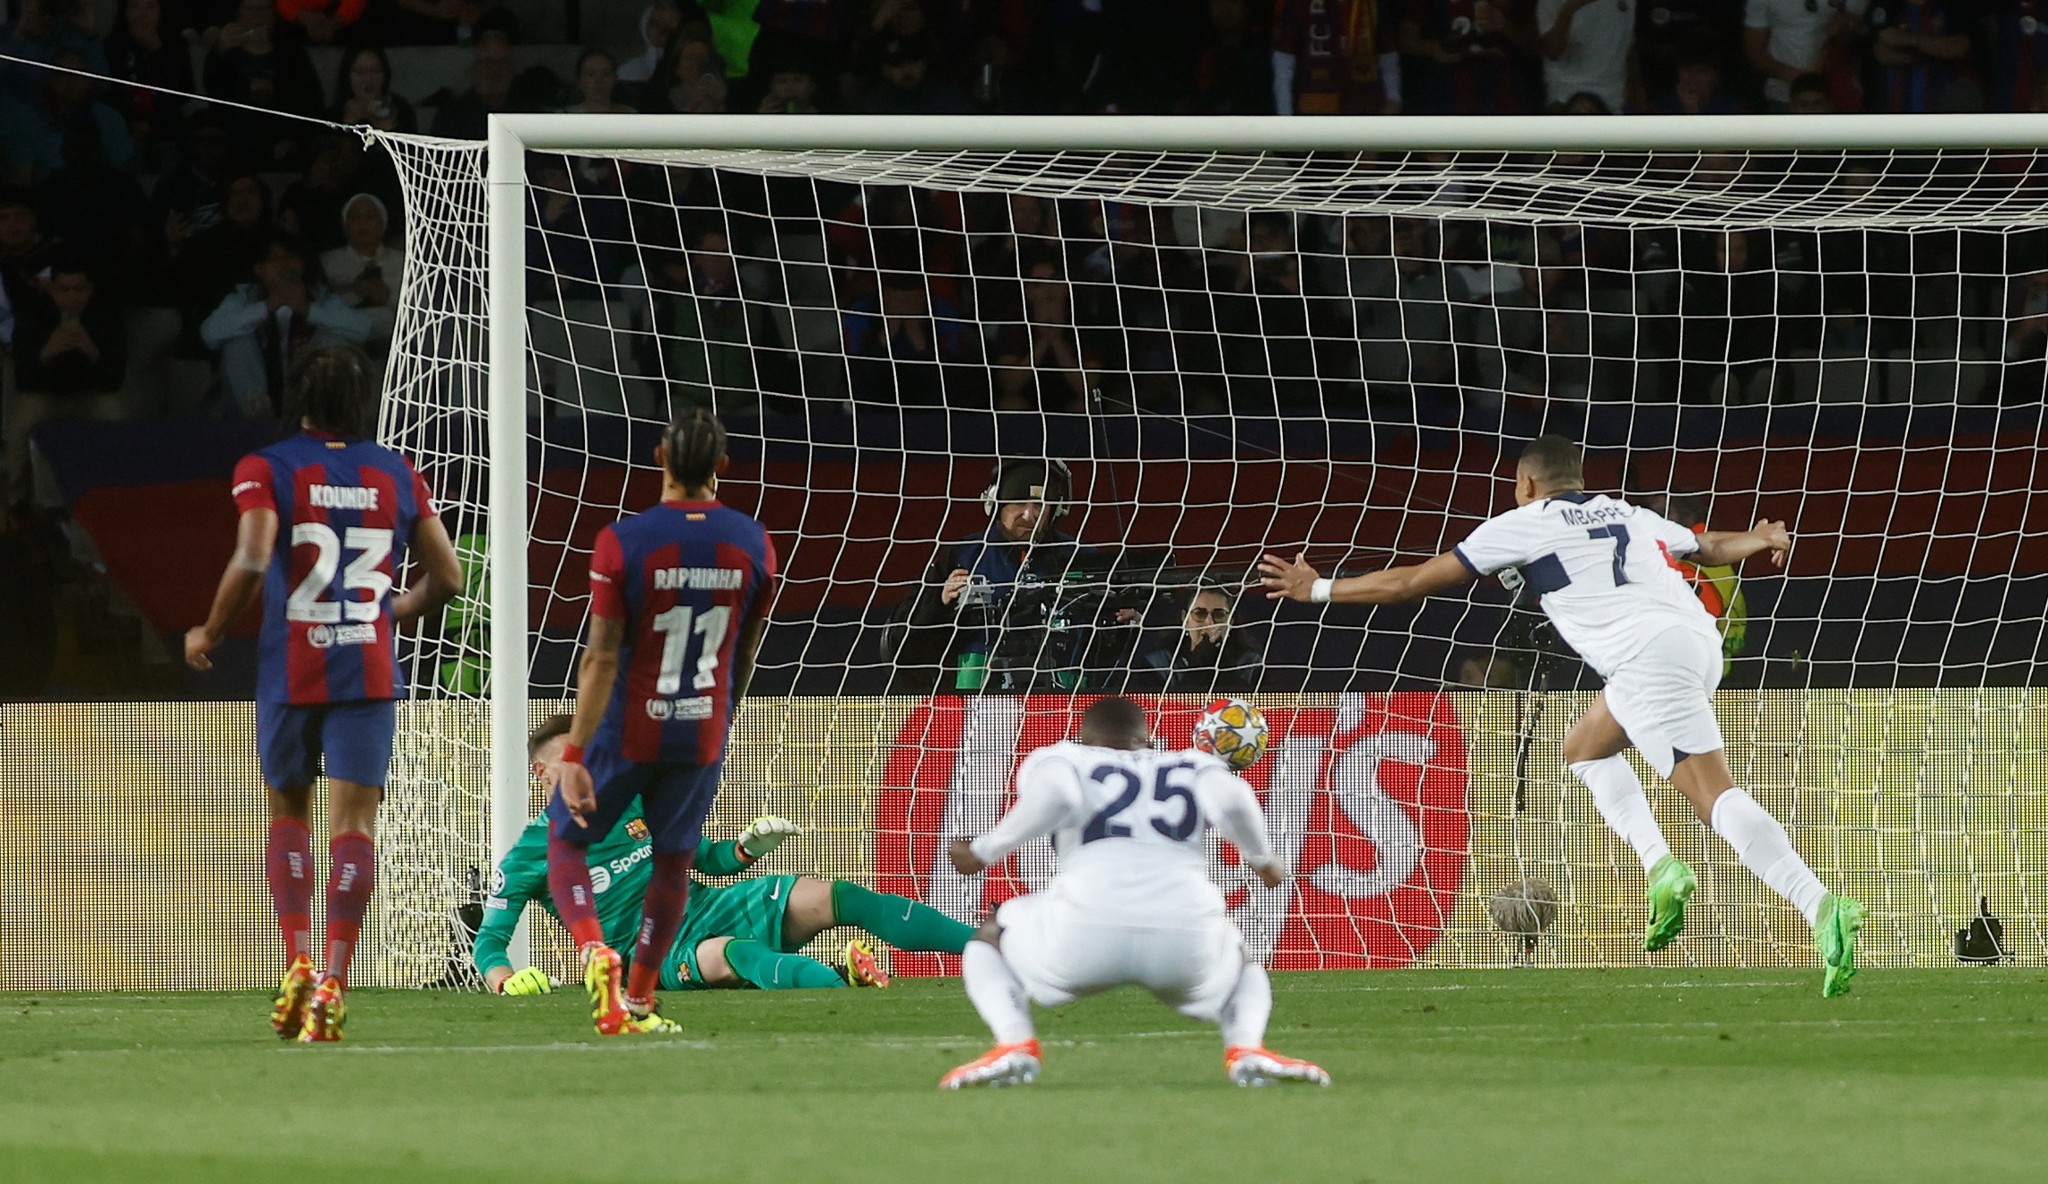 Mbapp celebra el 1-3 que daba la vuelta a la eliminatoria para el PSG en Montjuc.